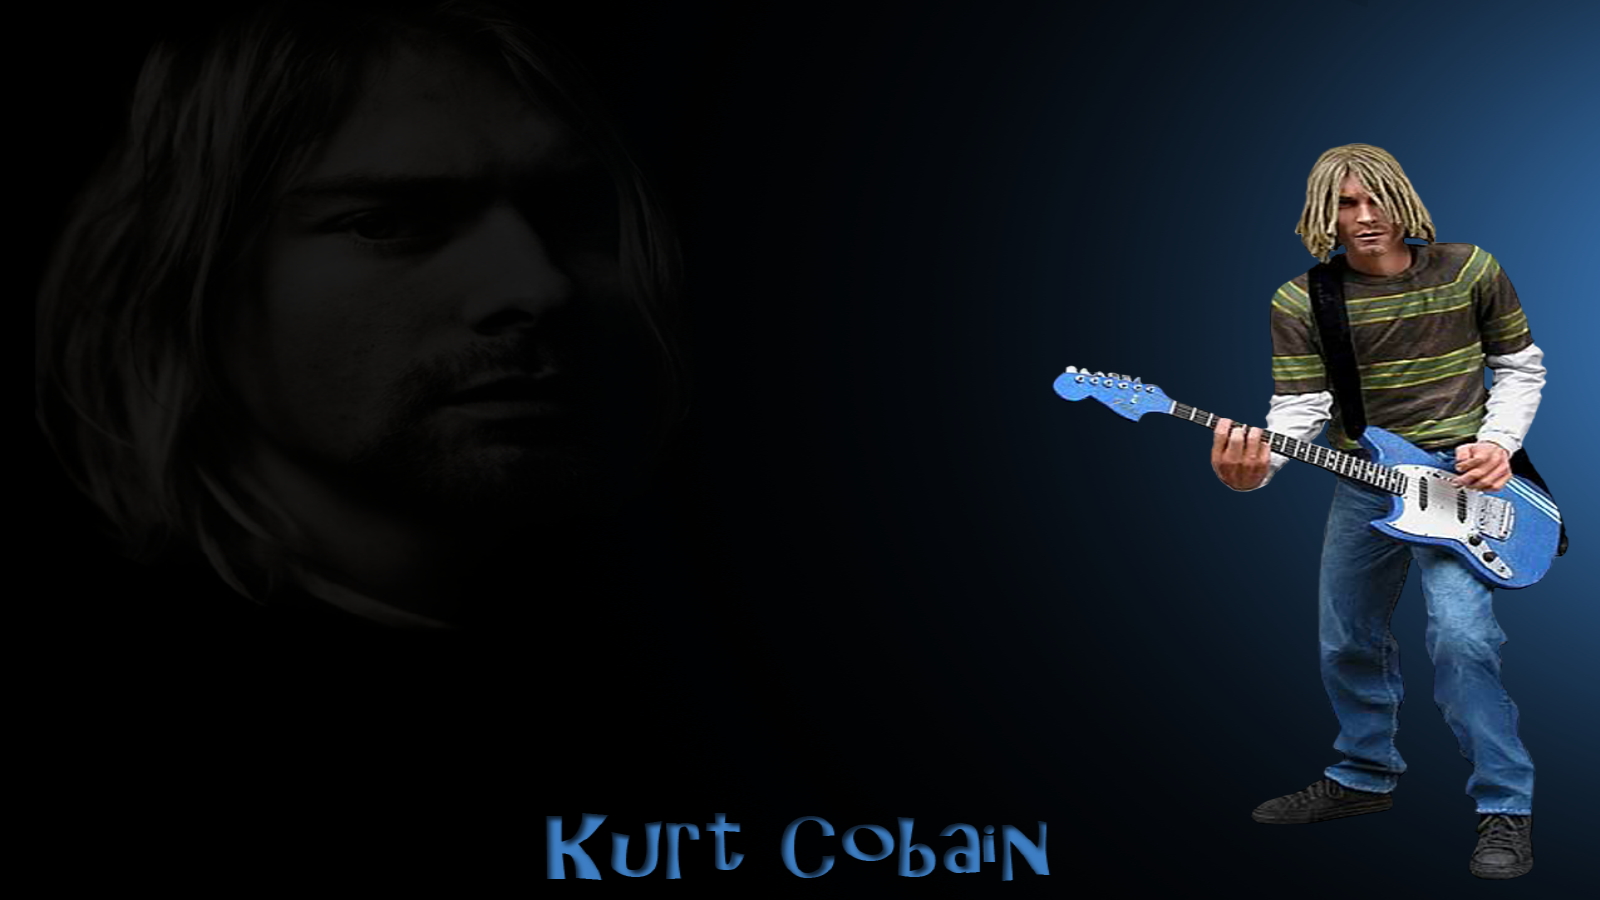 Kurt Cobain Computer Wallpapers Desktop Backgrounds 1600x900 ID